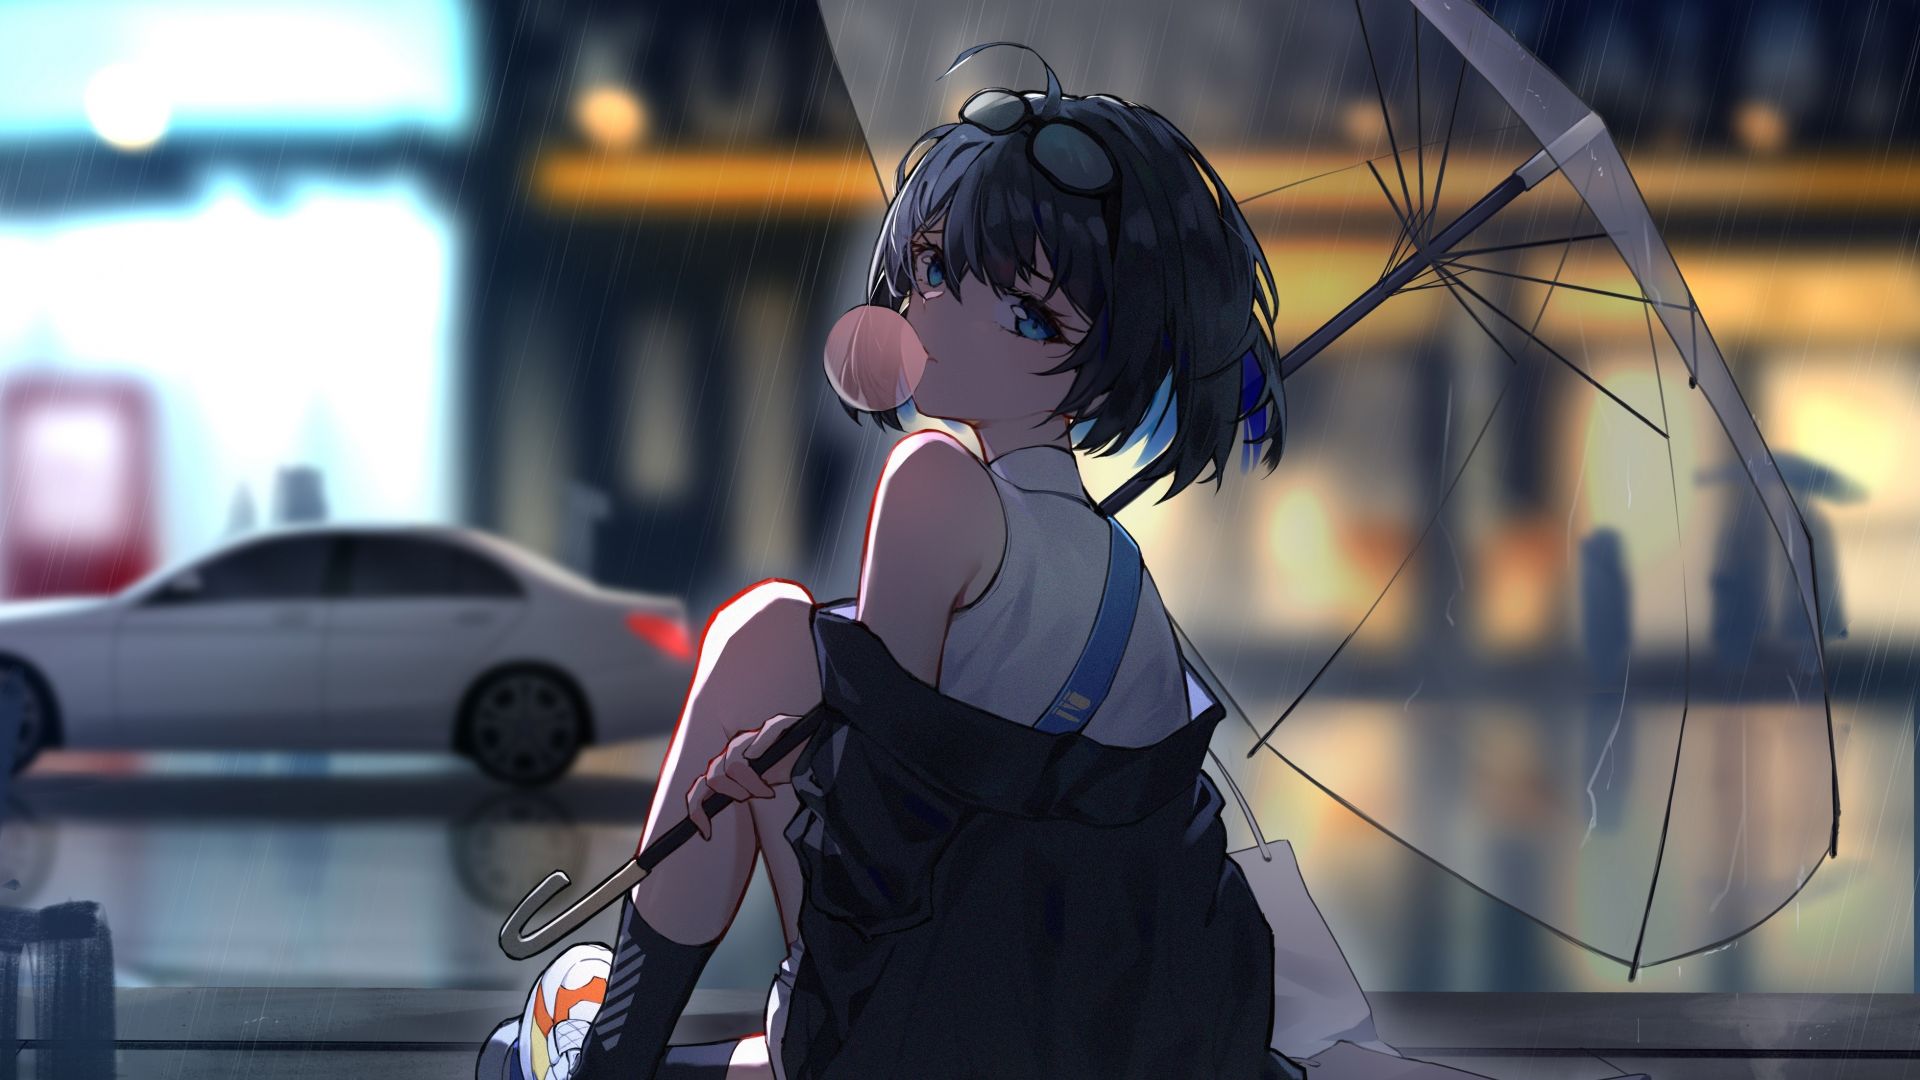 Enjoying rain, anime girl wallpaper, HD image, picture, background, 5b8d62